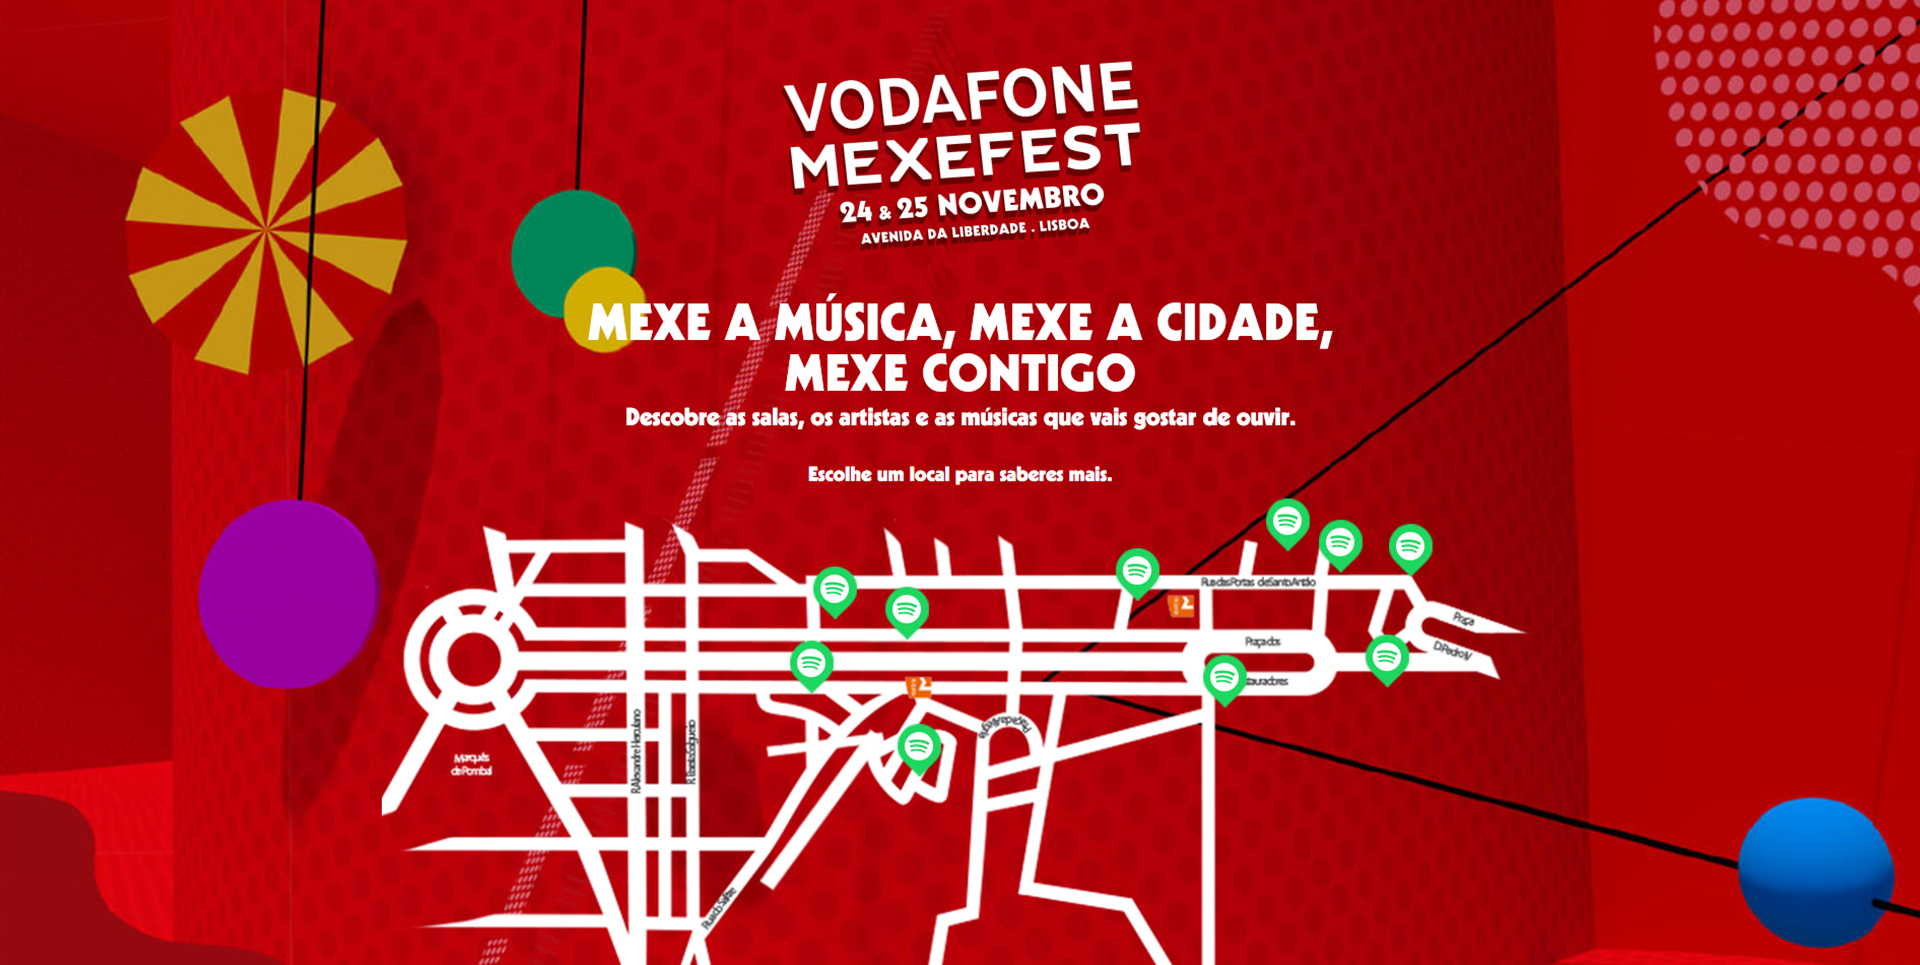 Vodafone - Mexefest